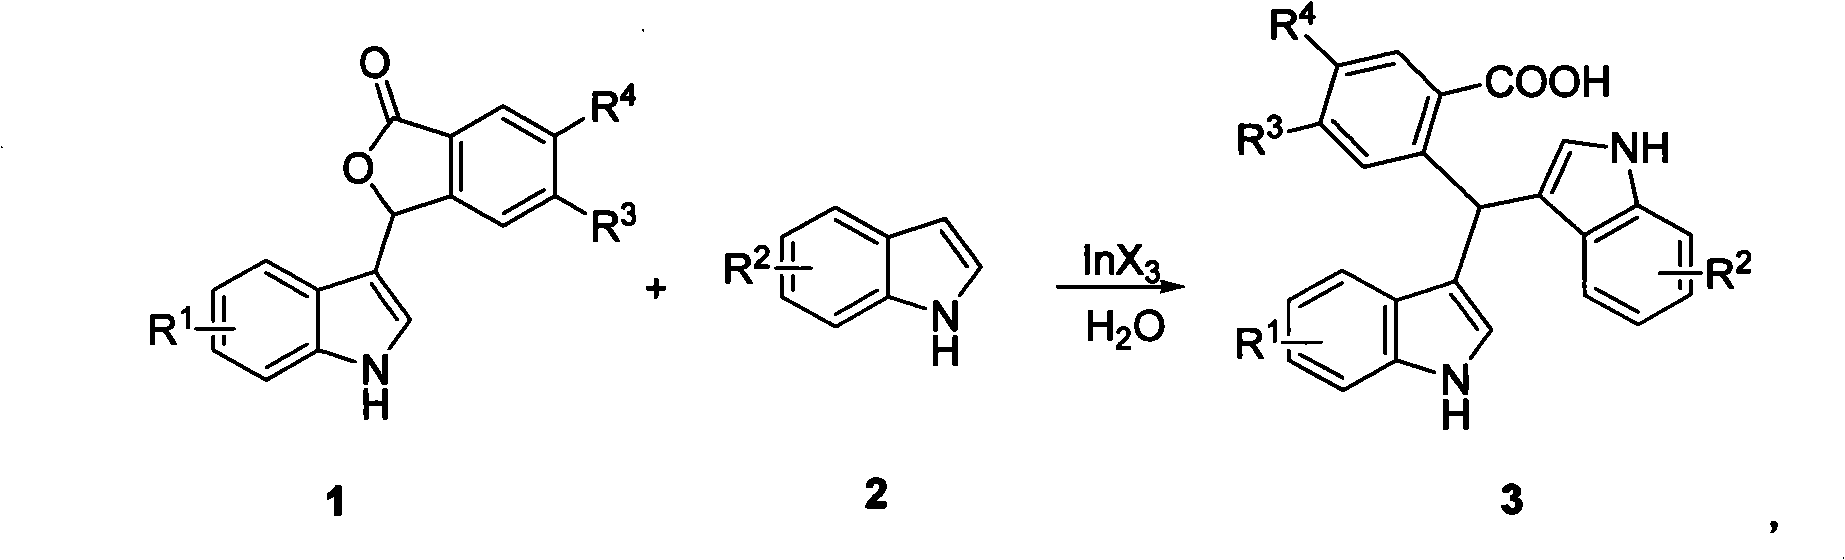 Method for preparing unsymmetrical bis(indolyl)methane compound